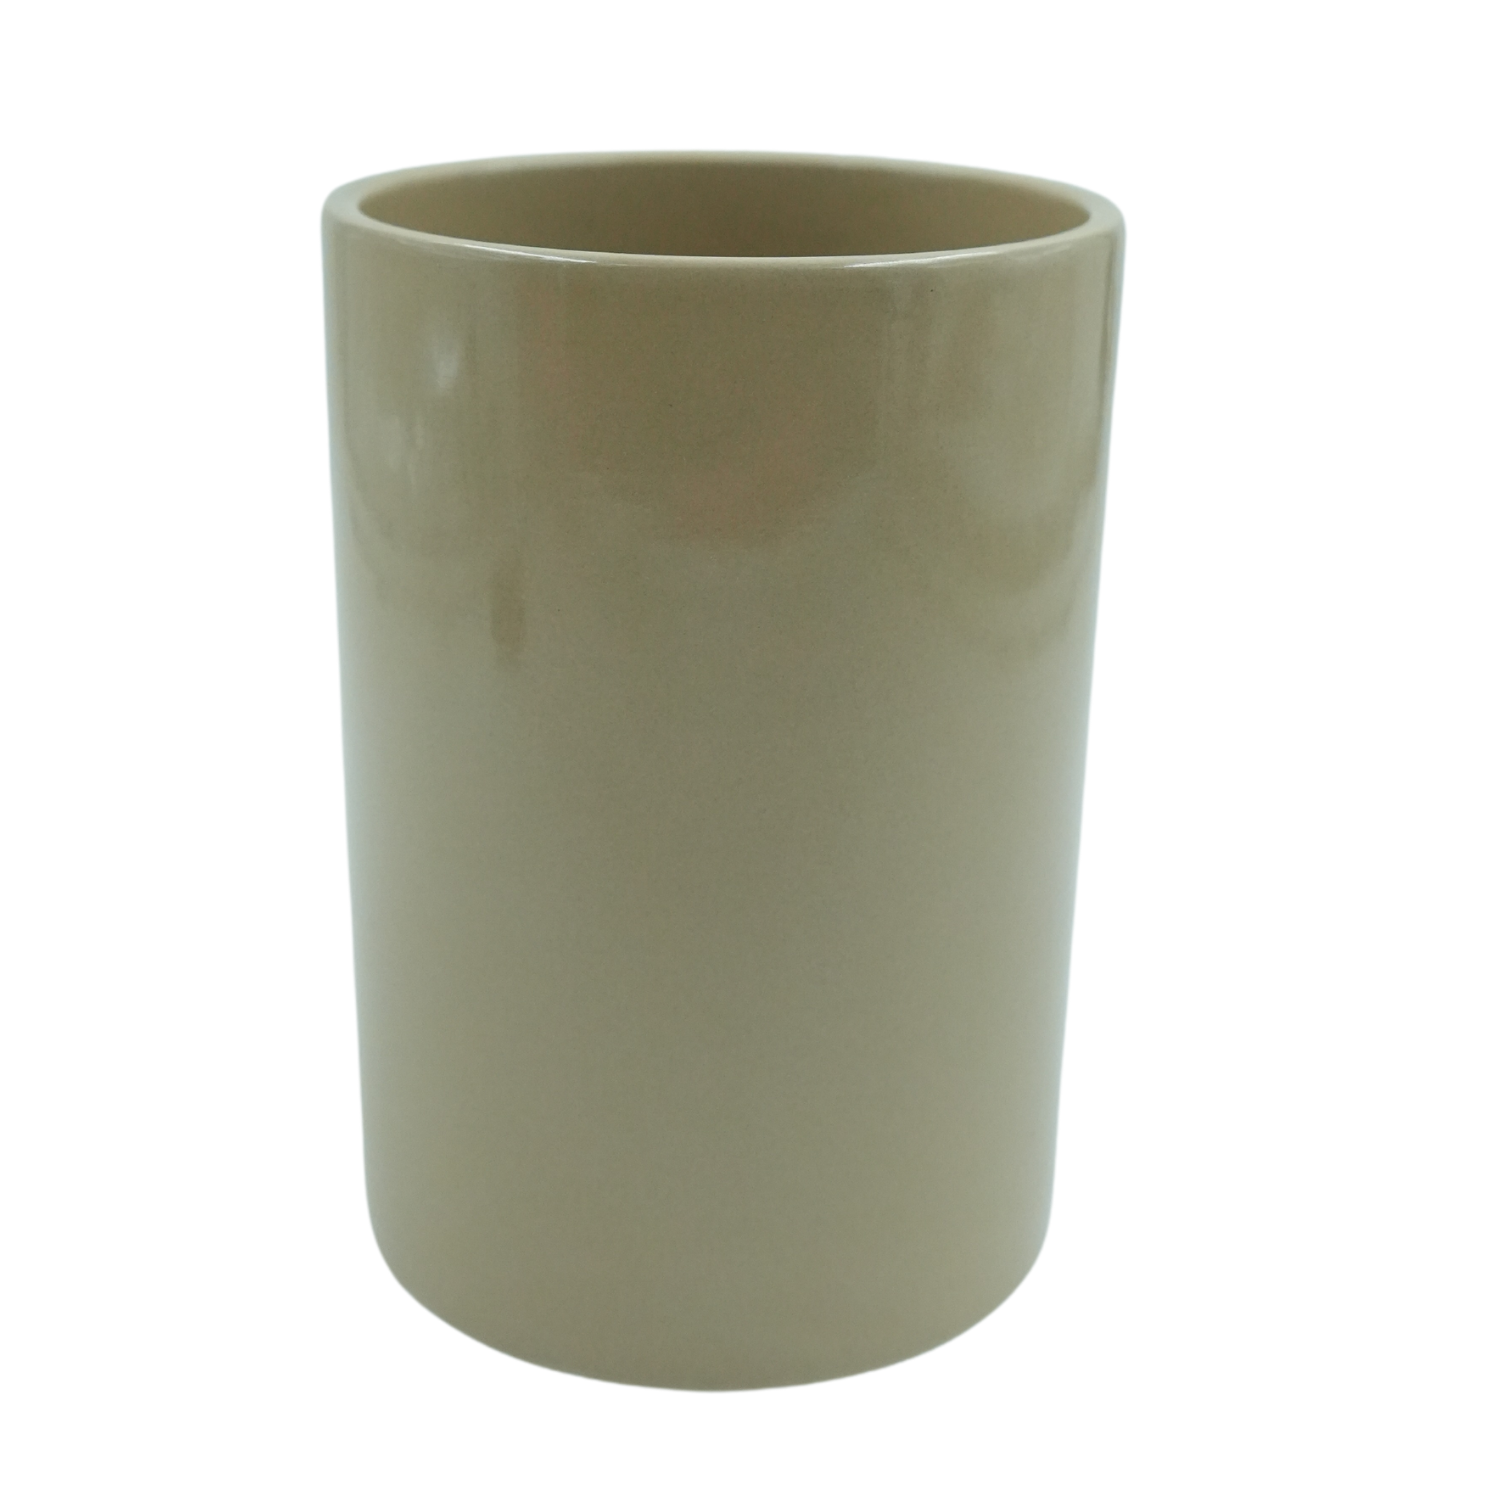 Designer Ceramic Pot (Camel, Glossy Finish,Medium) for Home & Indoor Plant Decor